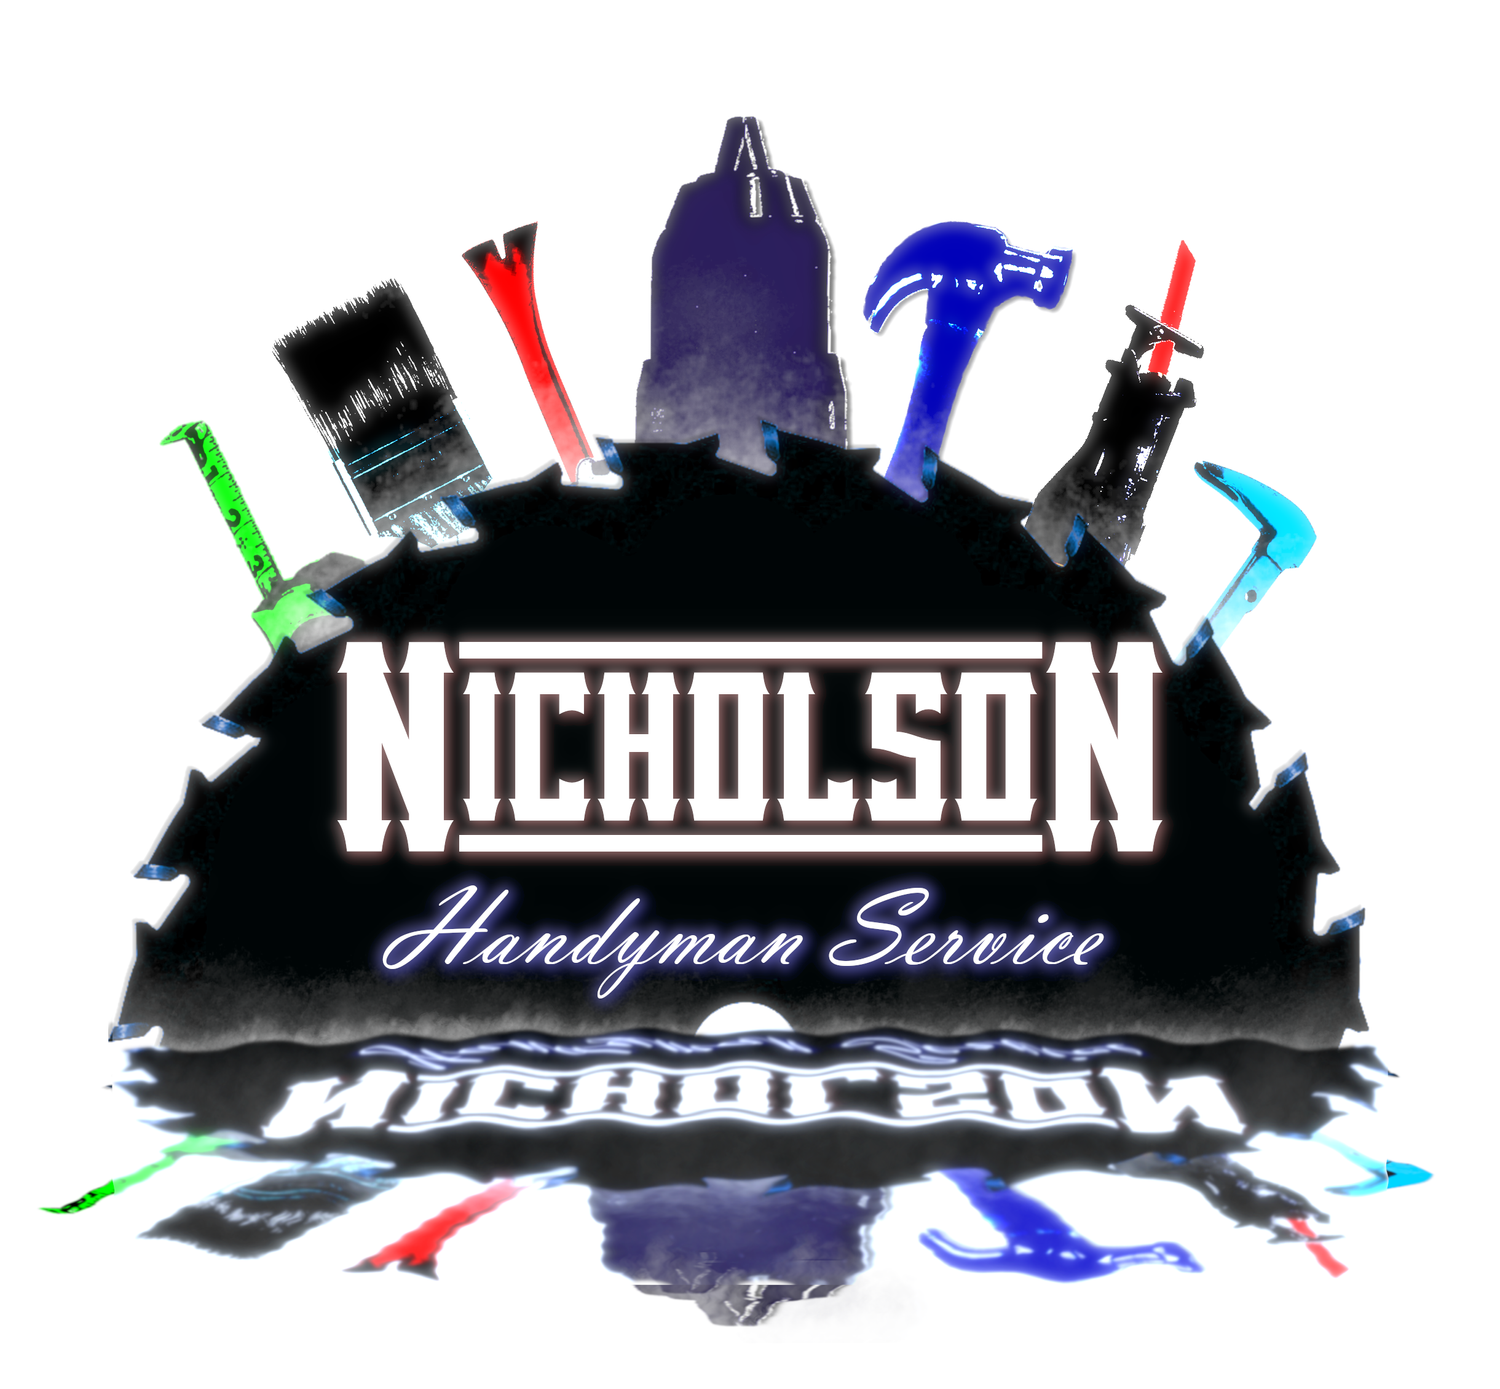 Nicholson Handyman Service